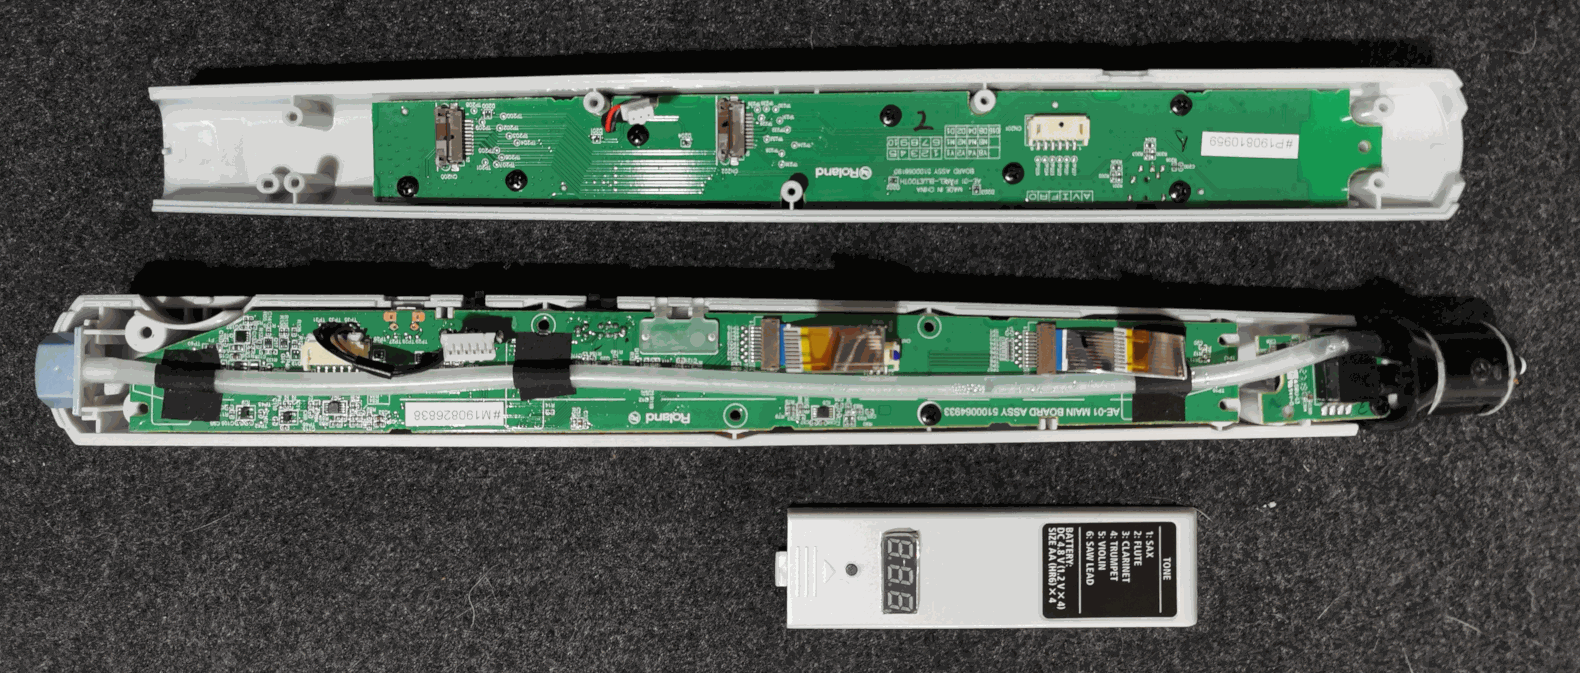 Roland Aerophone Mini AE-01 - Internals 1